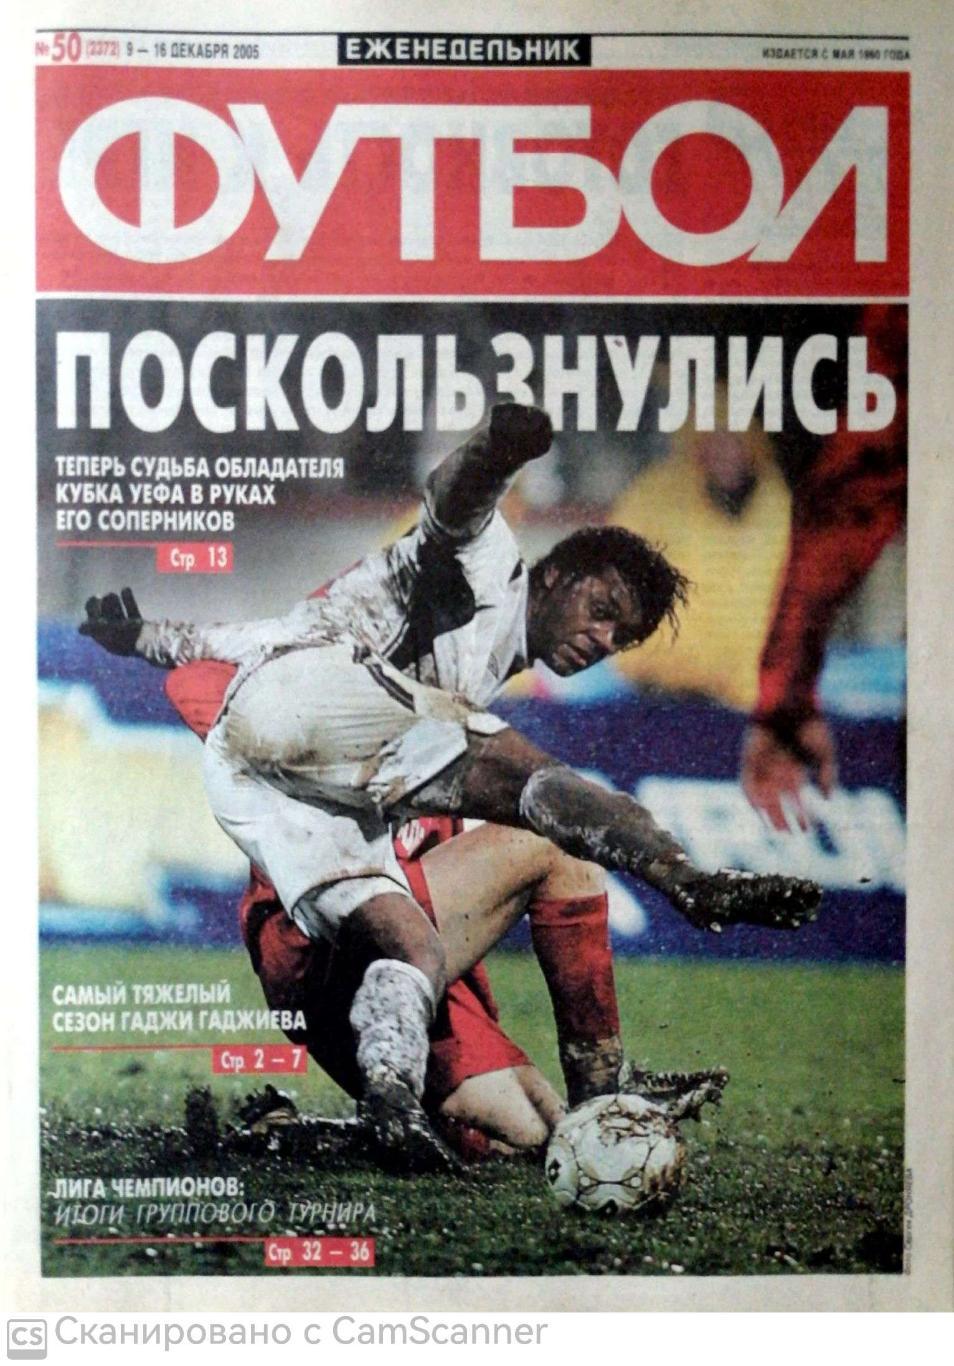 Еженедельник «Футбол» (Москва). 2005 год. №50